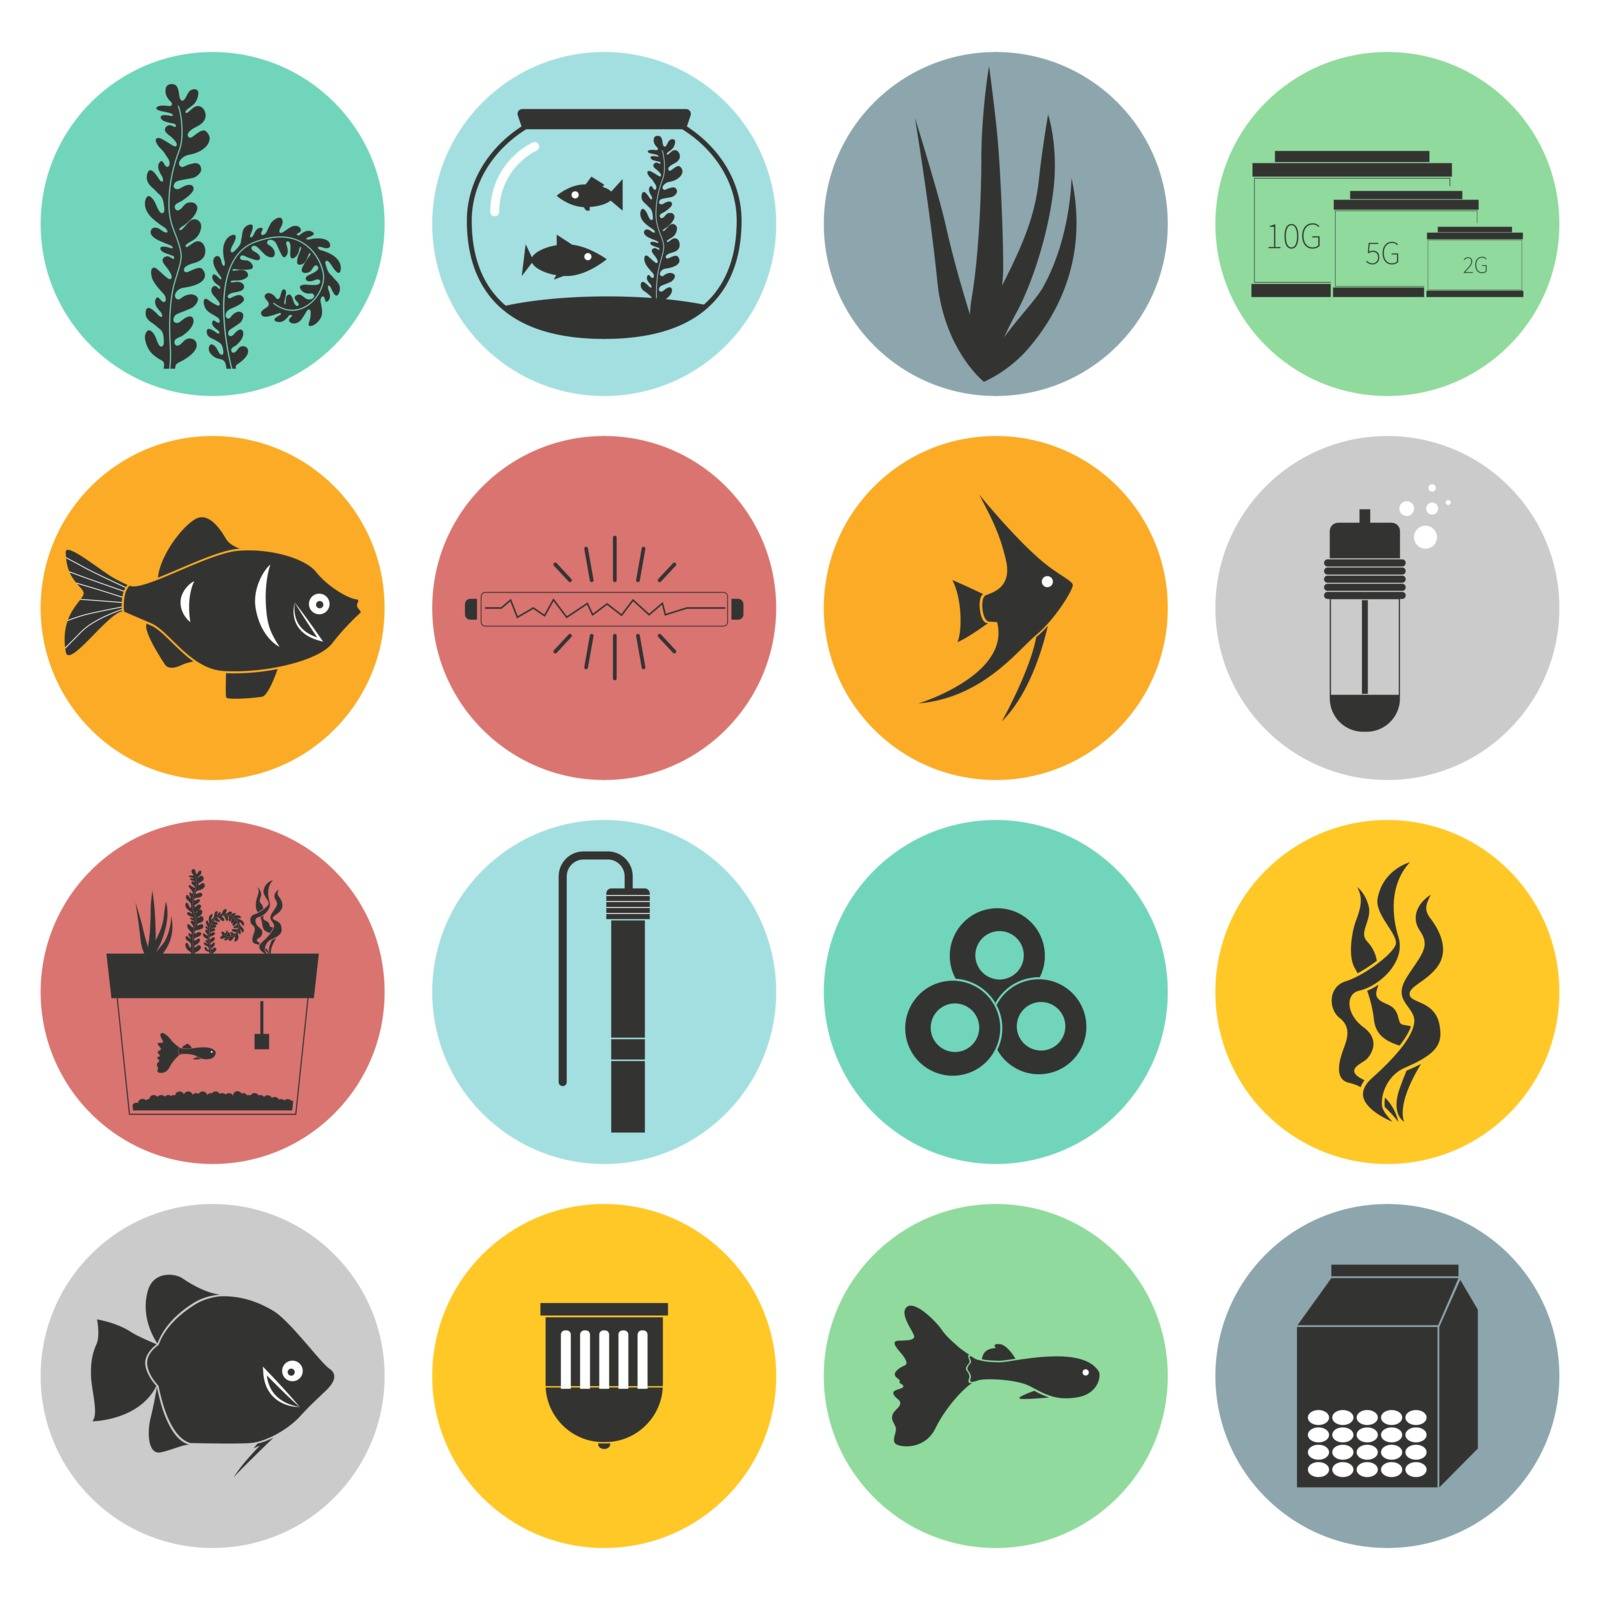 Aquarium Icons by Favete